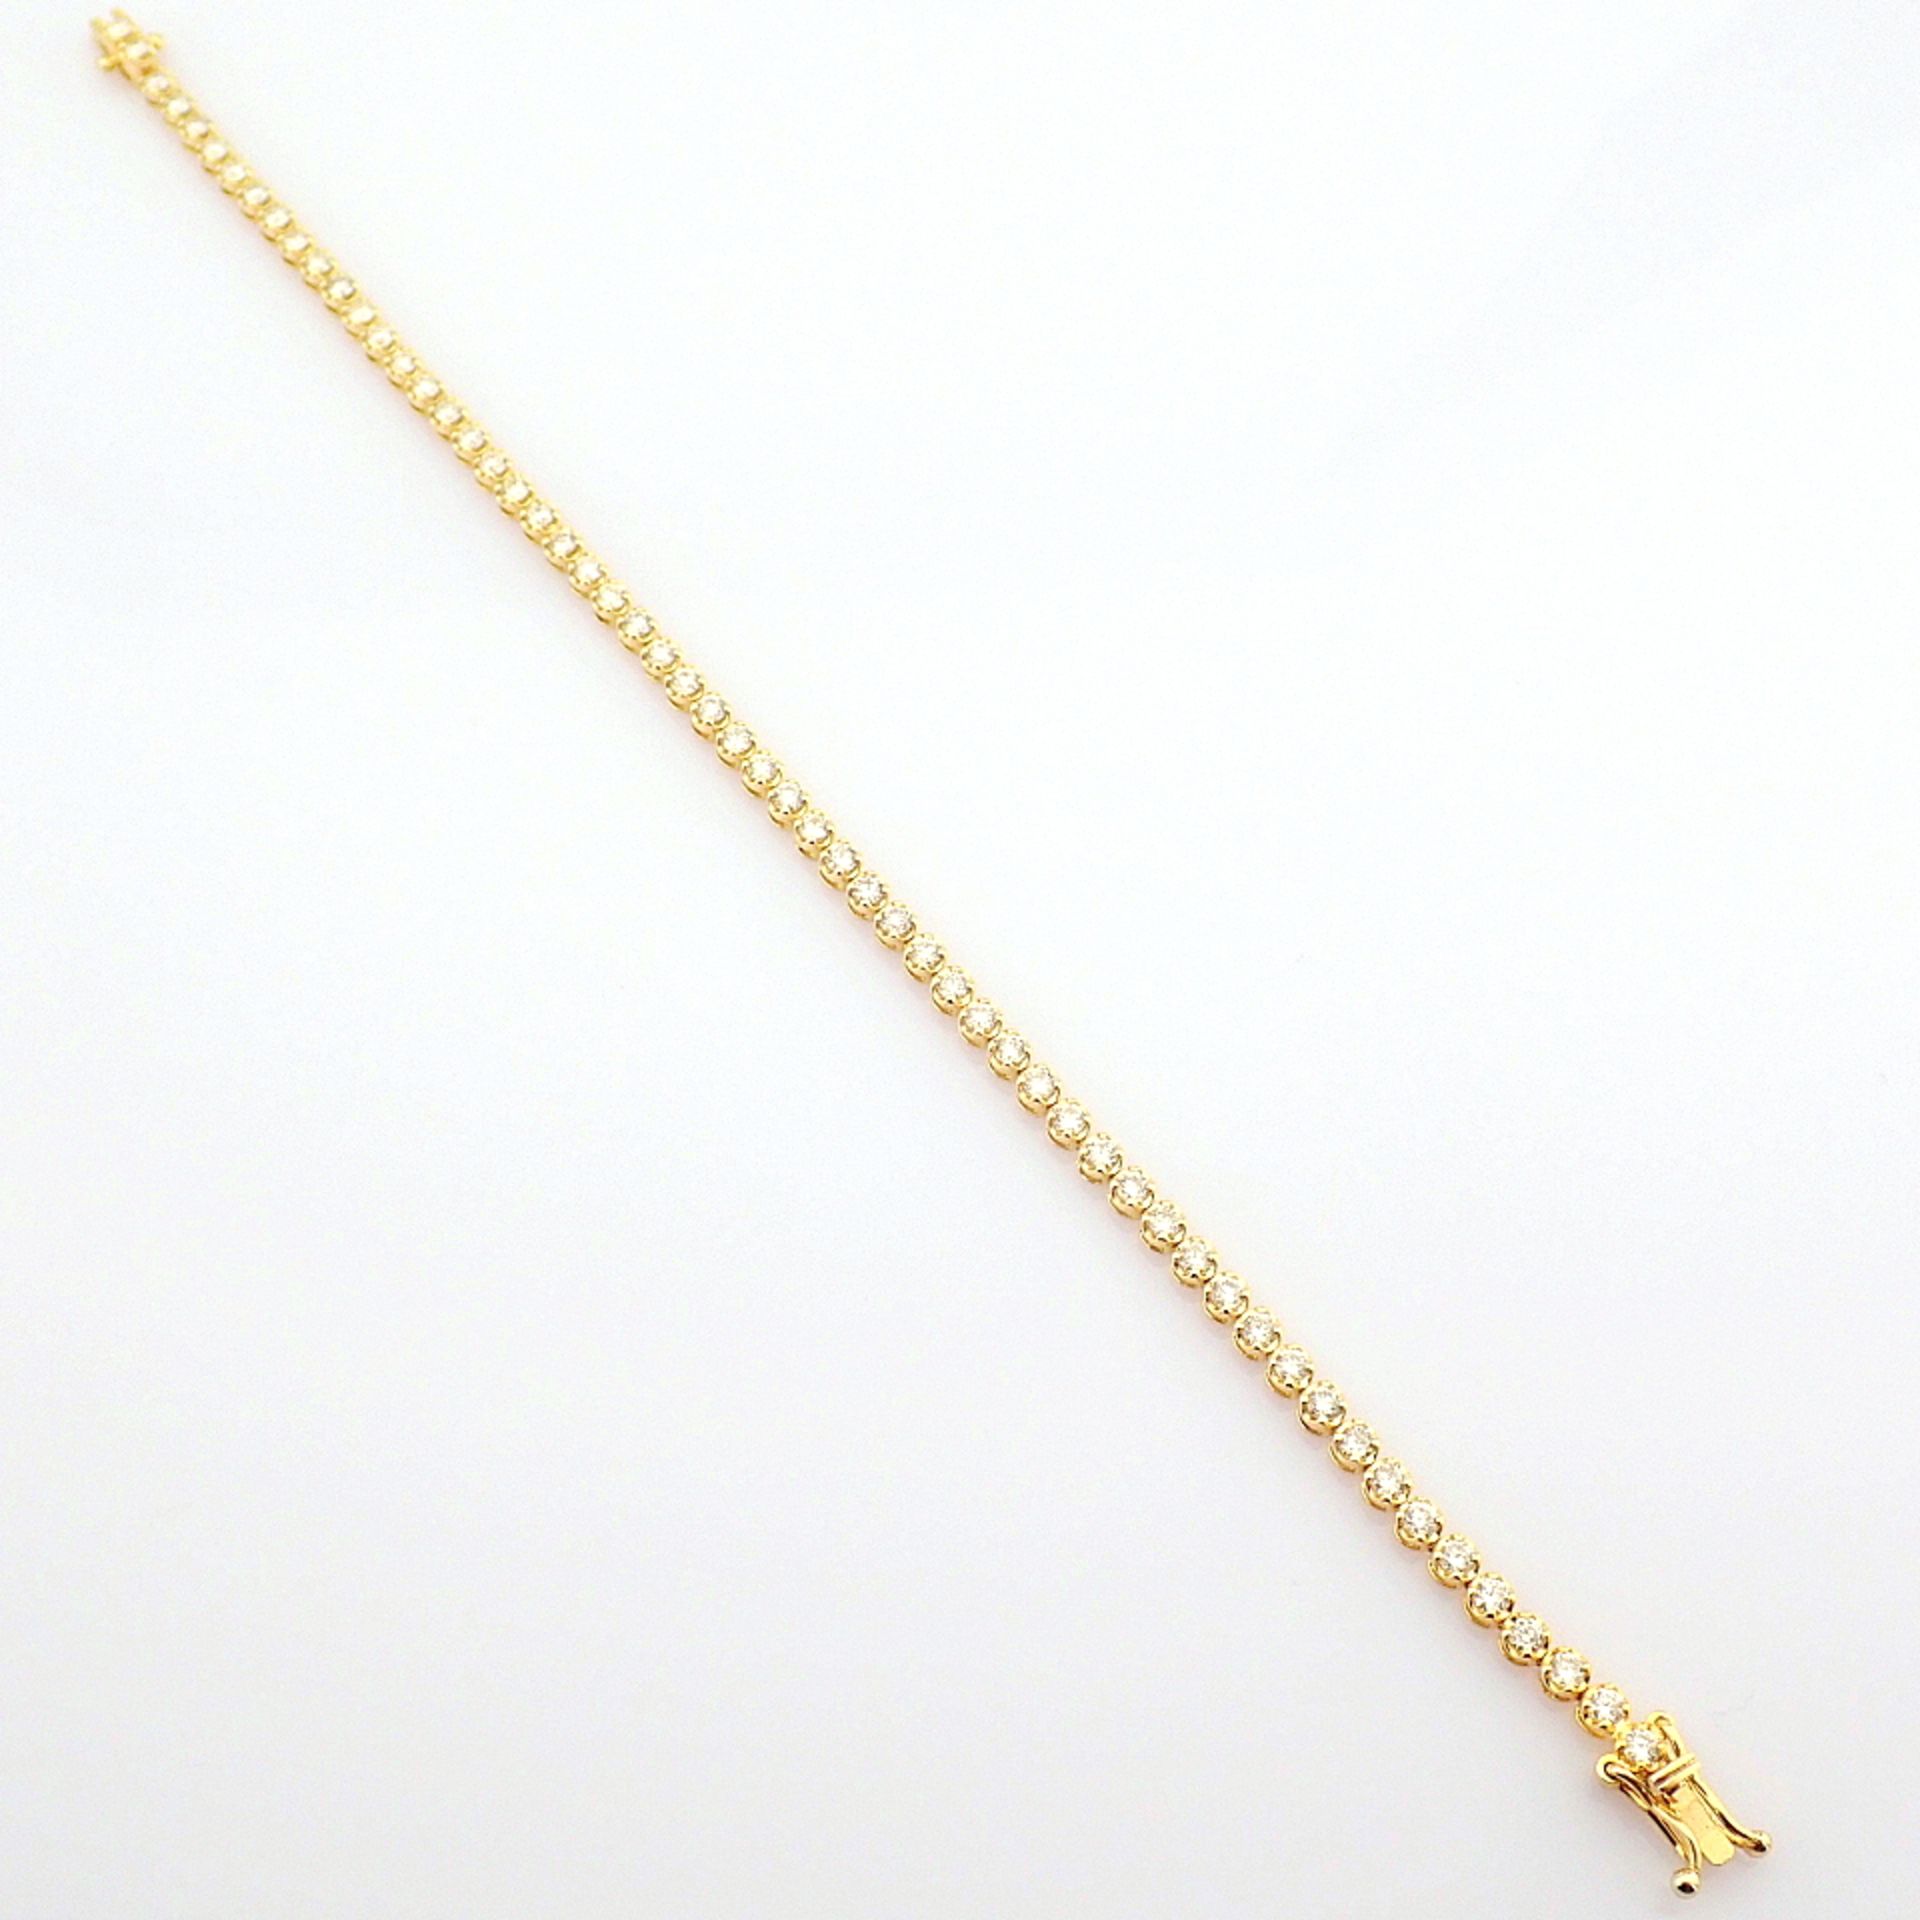 2,10 Ct. Diamond Tennis Bracelet (Crown) - 14K Yellow Gold - Image 2 of 14